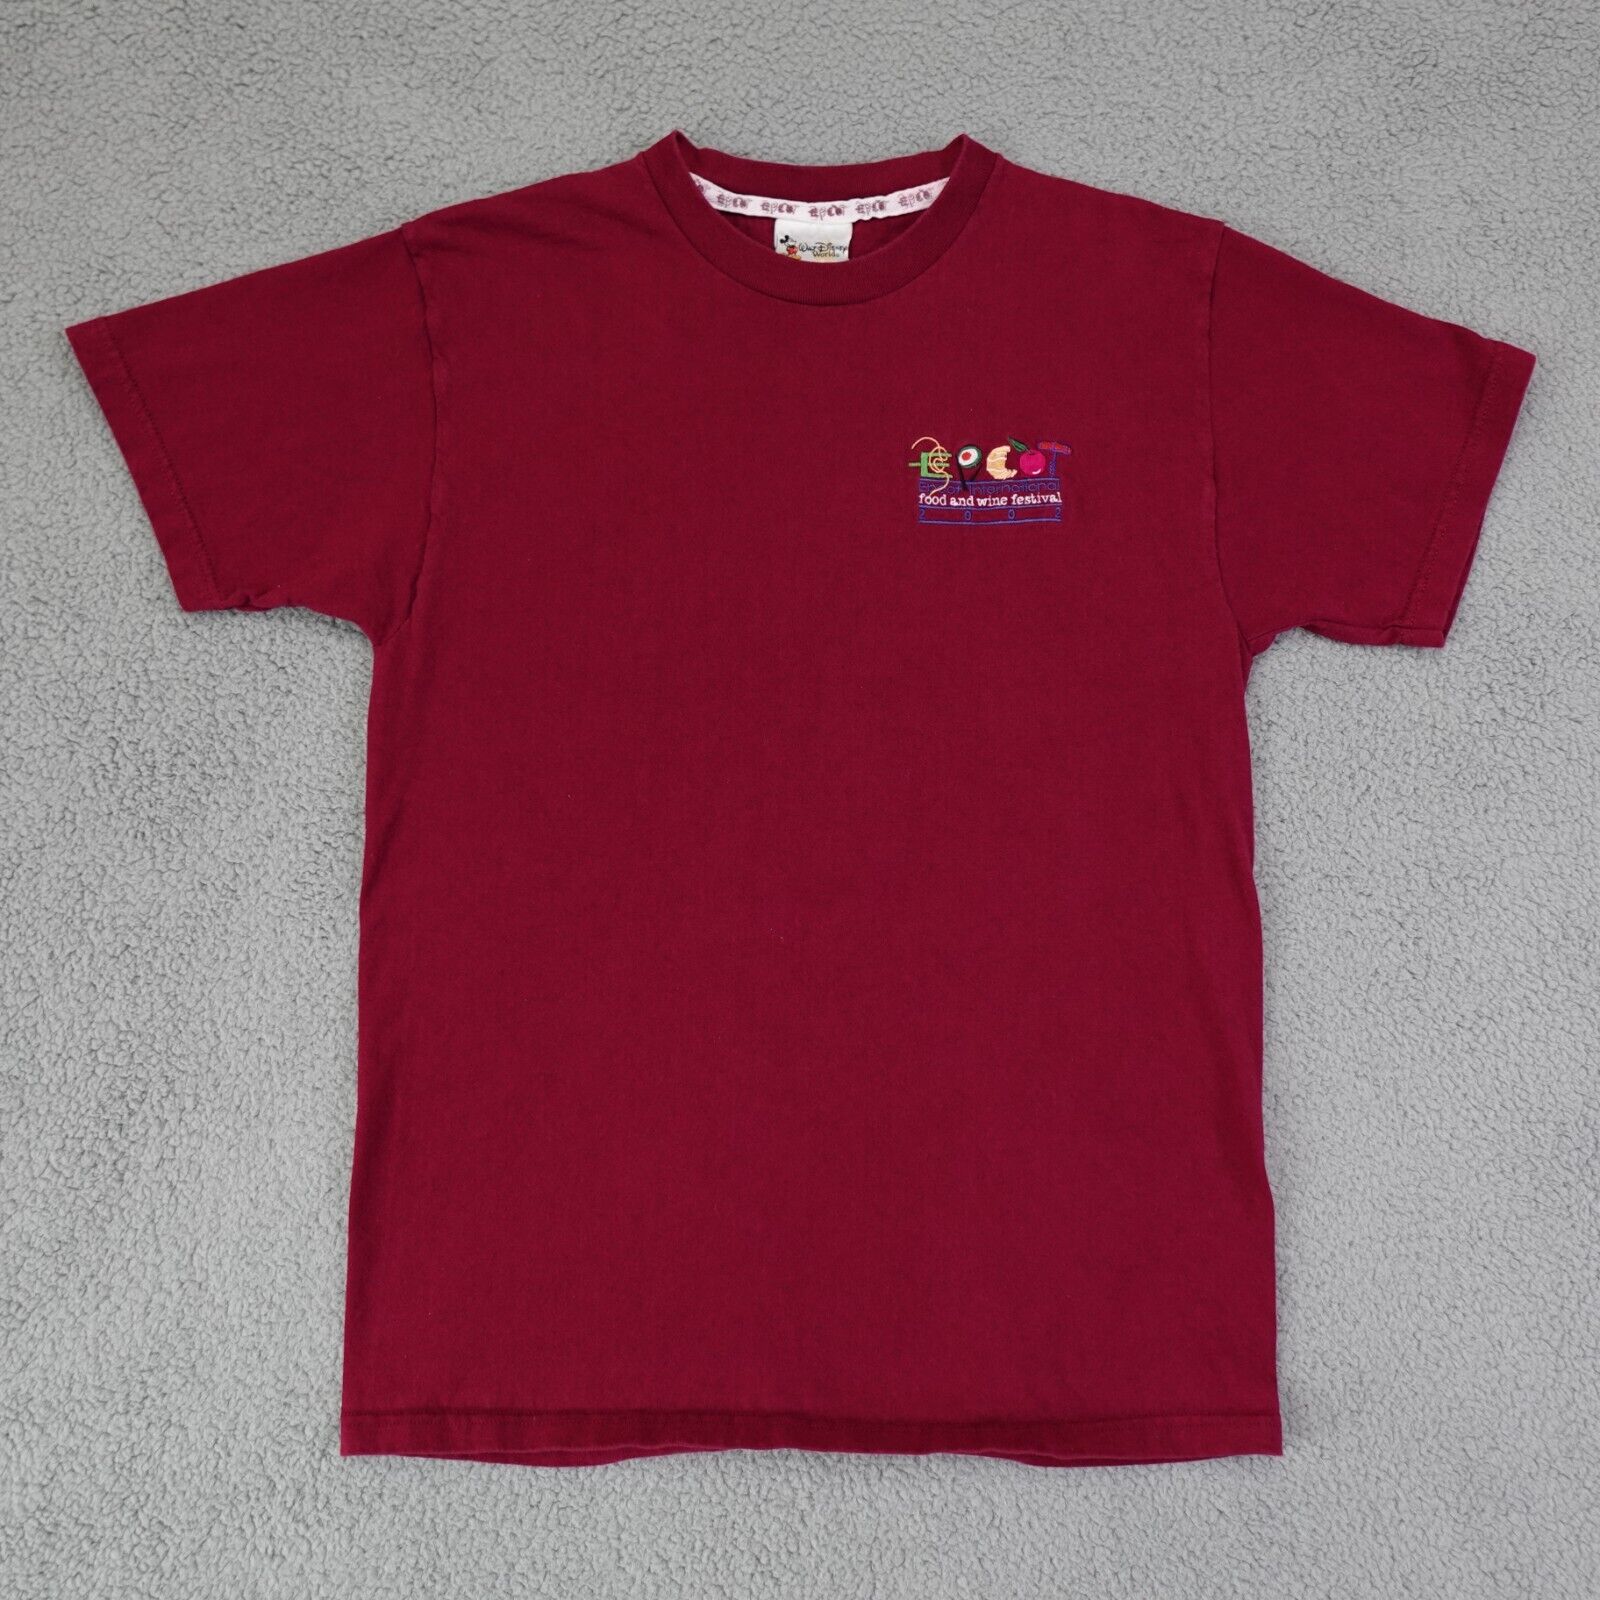 Disney Shirt Adult Large Red Epcot Food & Wine Festival 2002 Embroidered Vintage